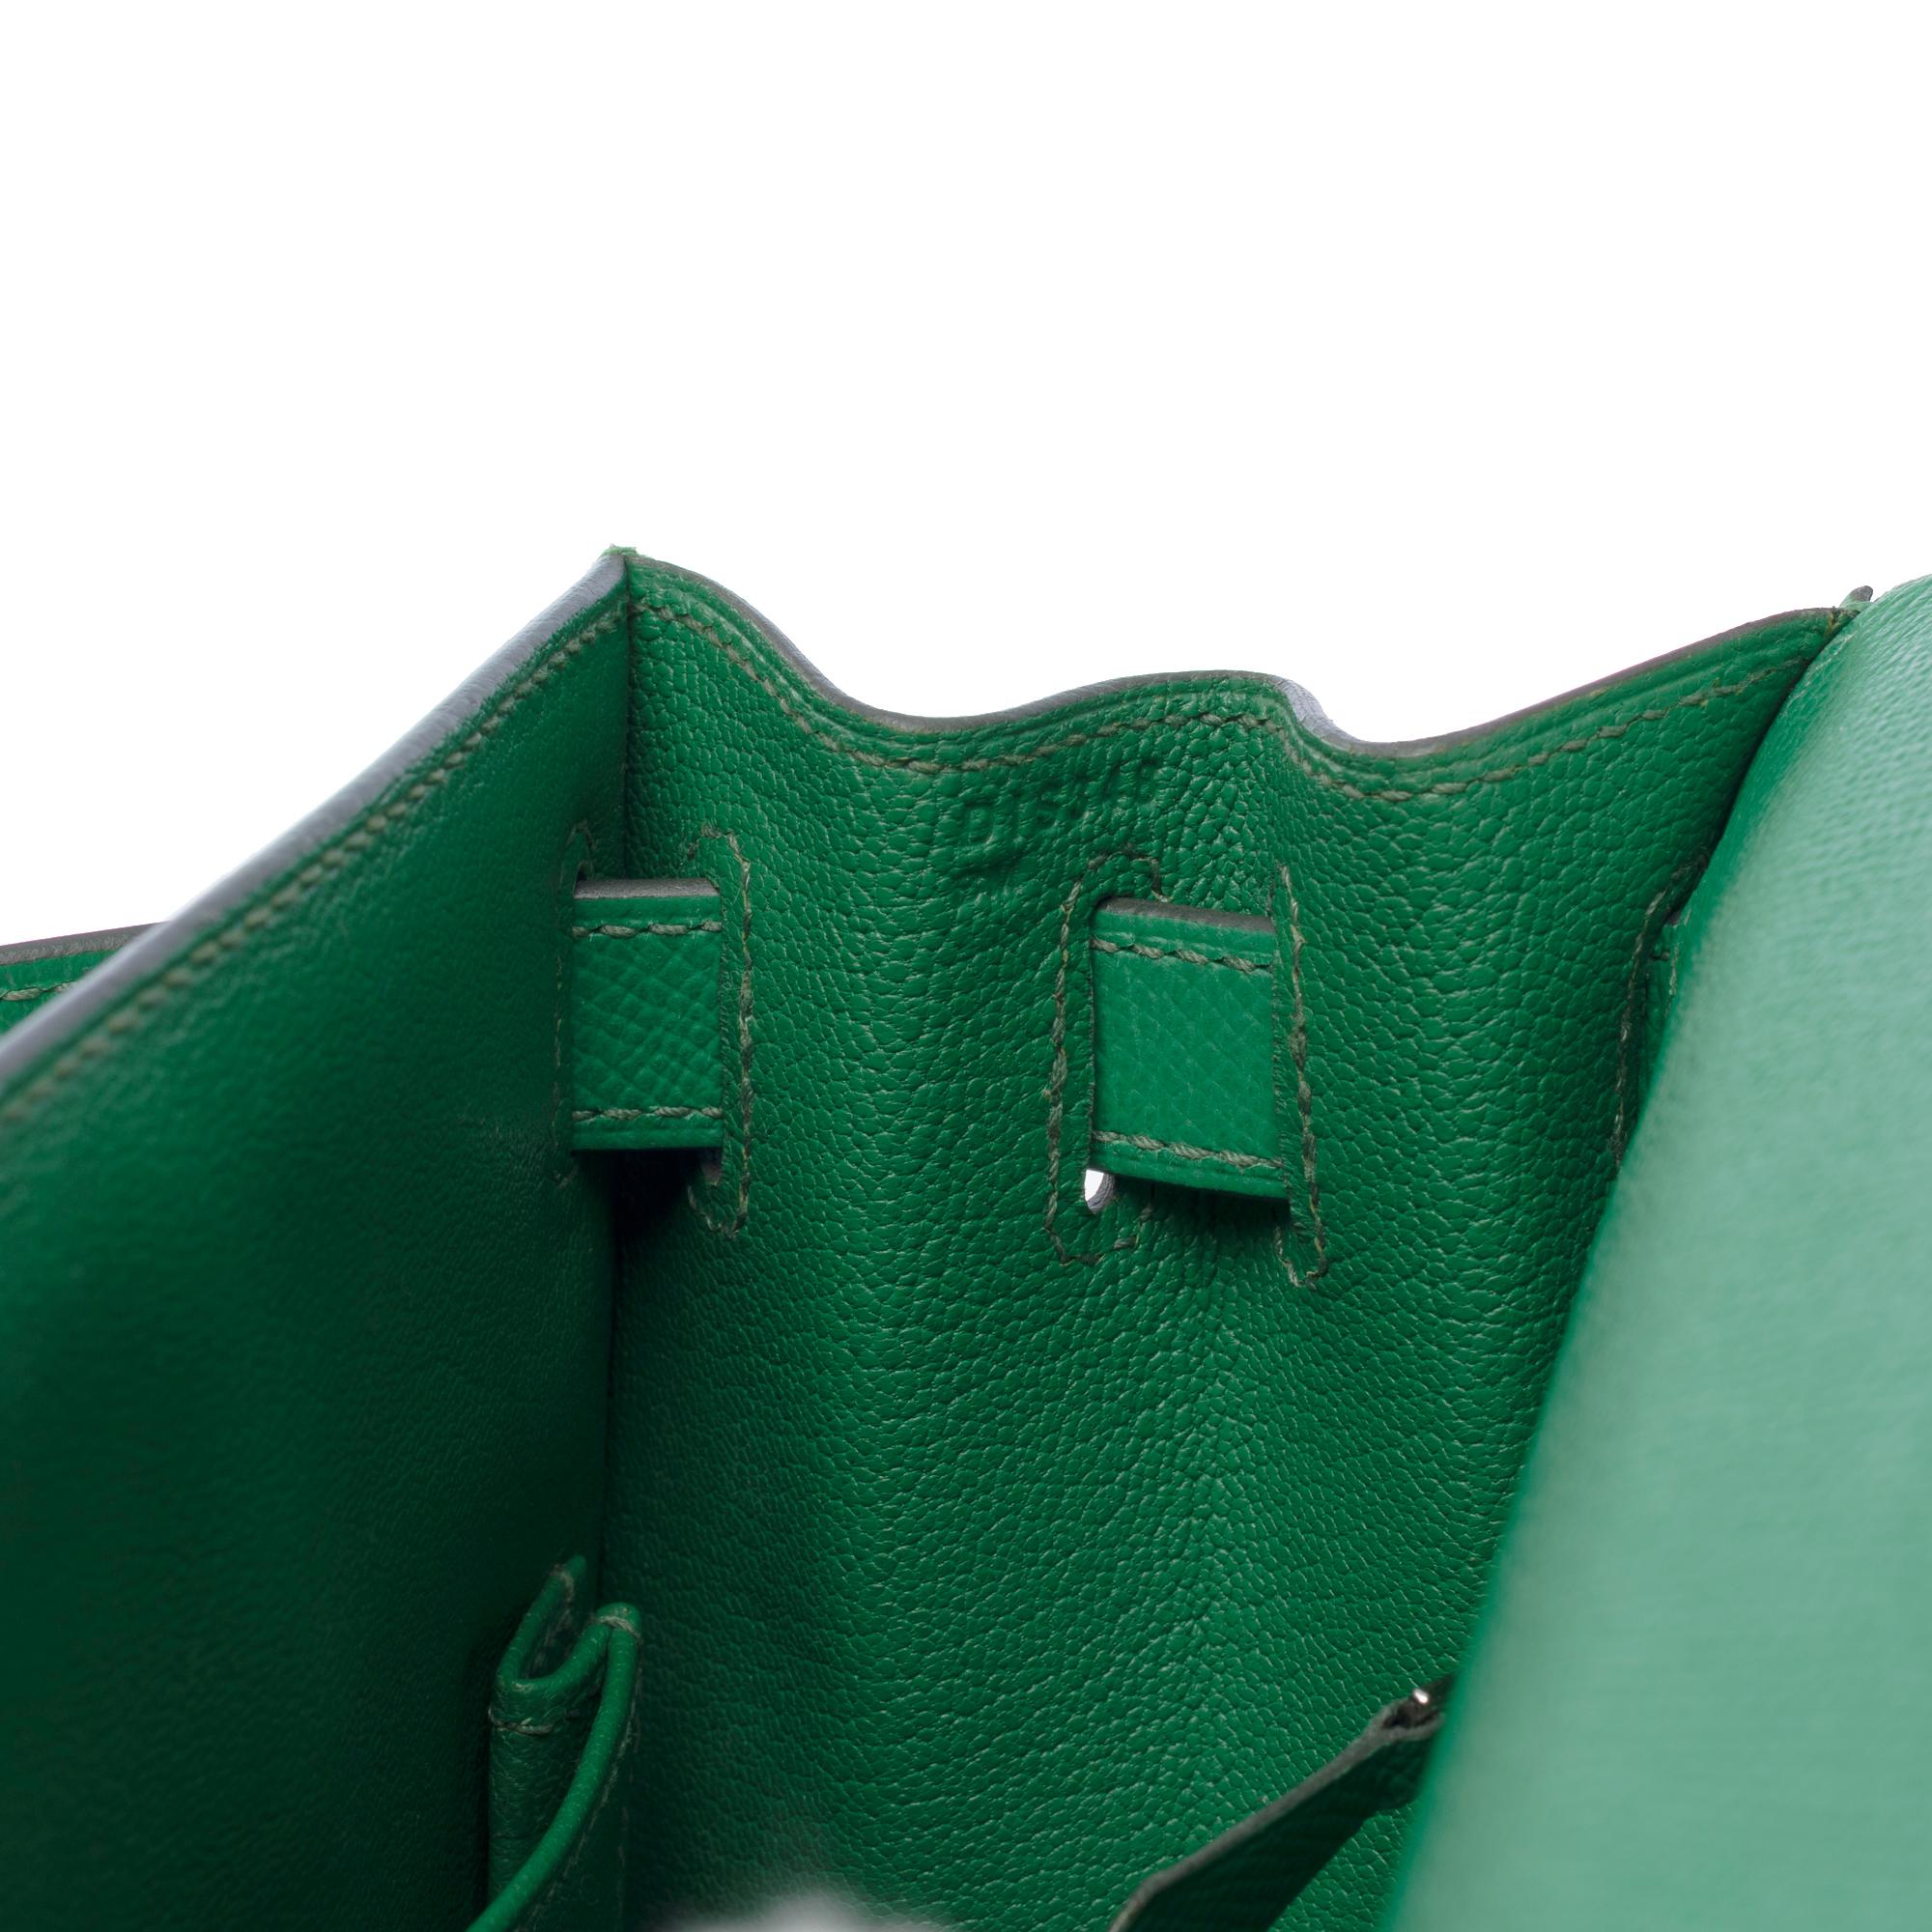 Bright Hermès Kelly 28 sellier handbag strap in Green Cactus Epsom leather, SHW 2